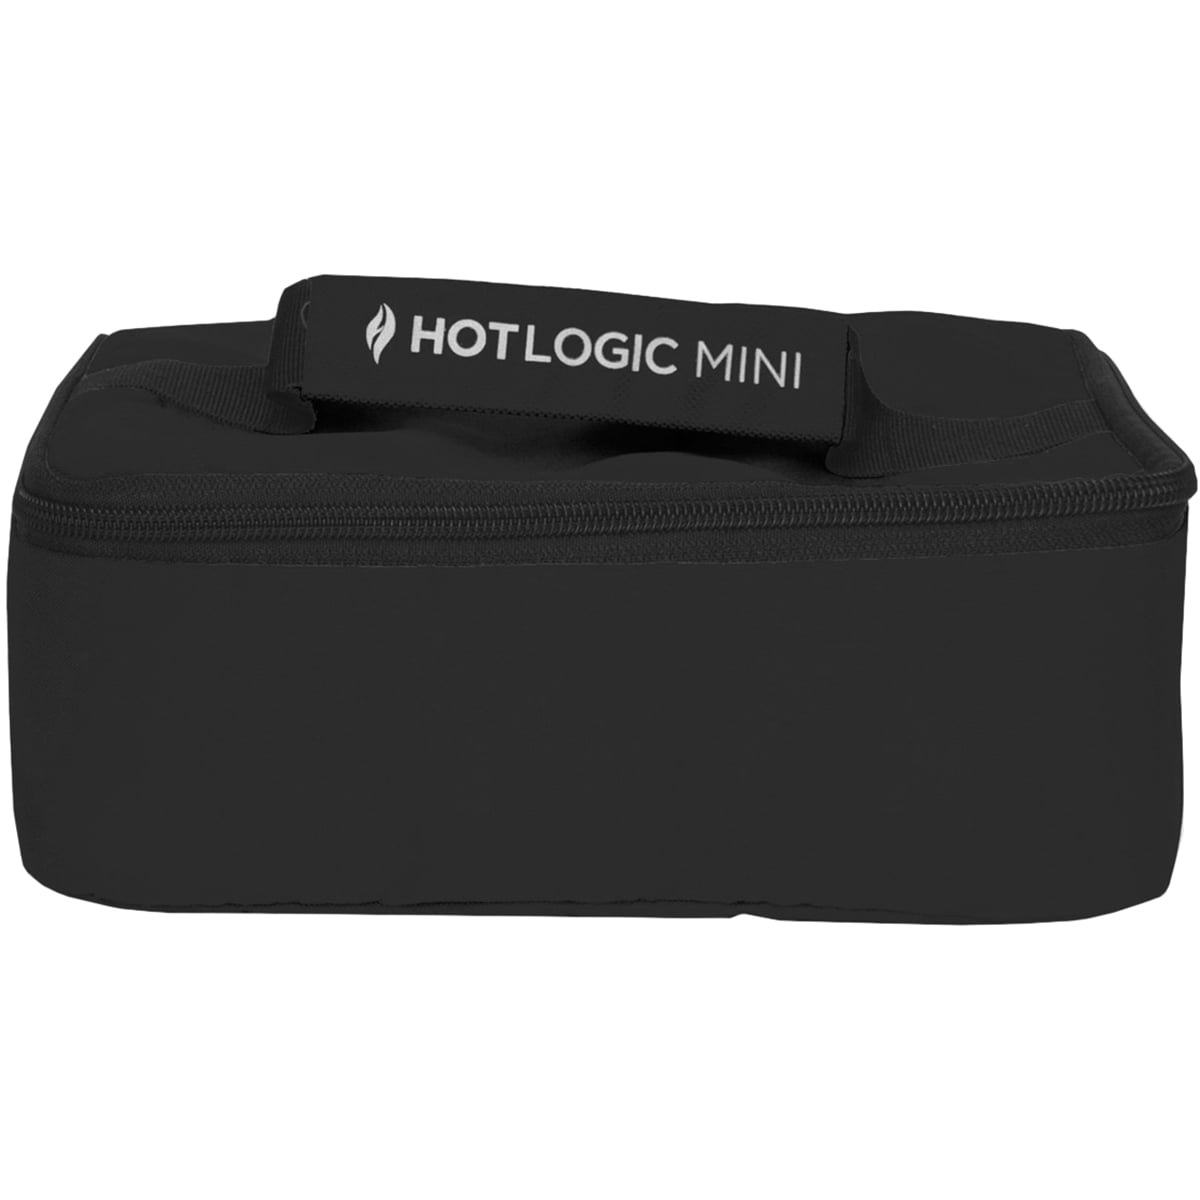 Hot Logic Mini Personal Portable Oven Black Nice Never Used! 856941003040